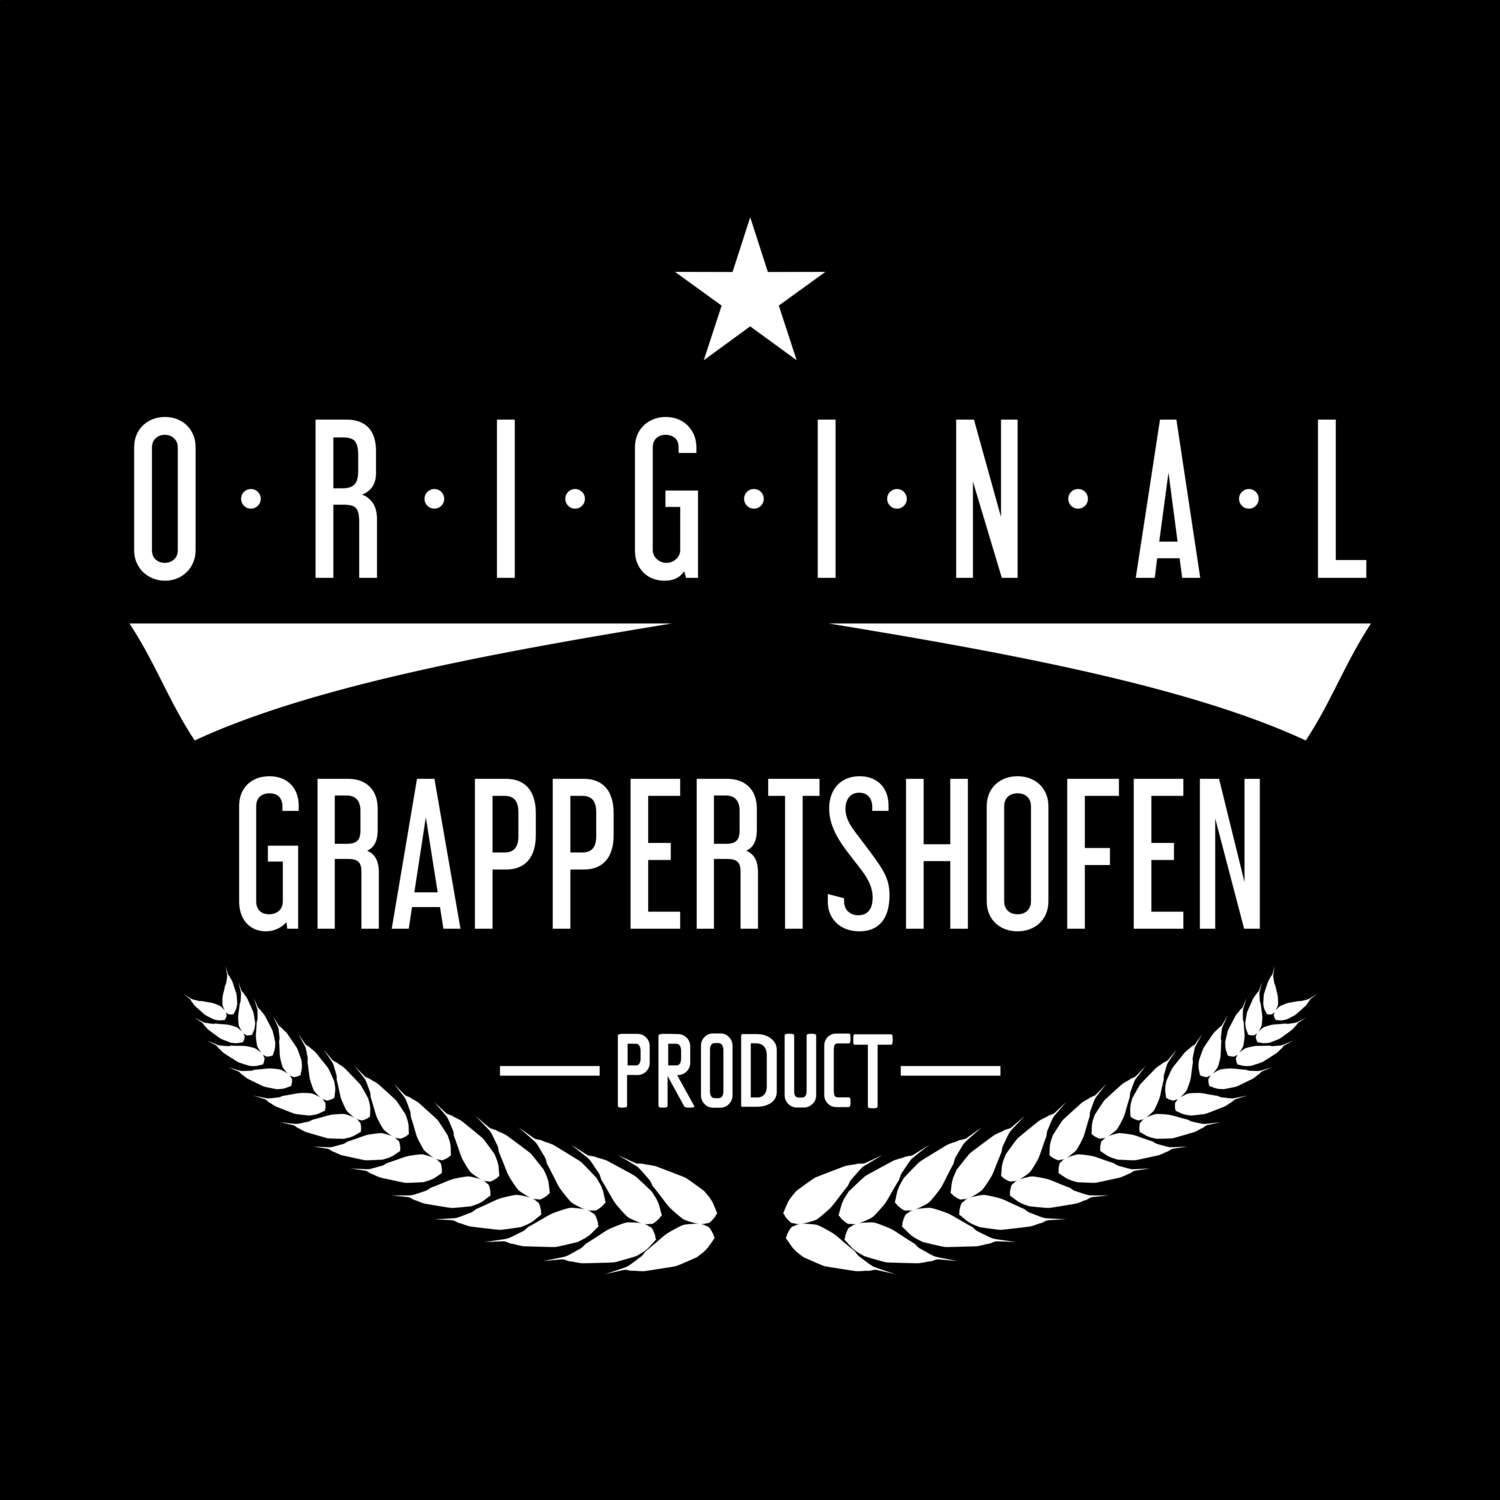 Grappertshofen T-Shirt »Original Product«